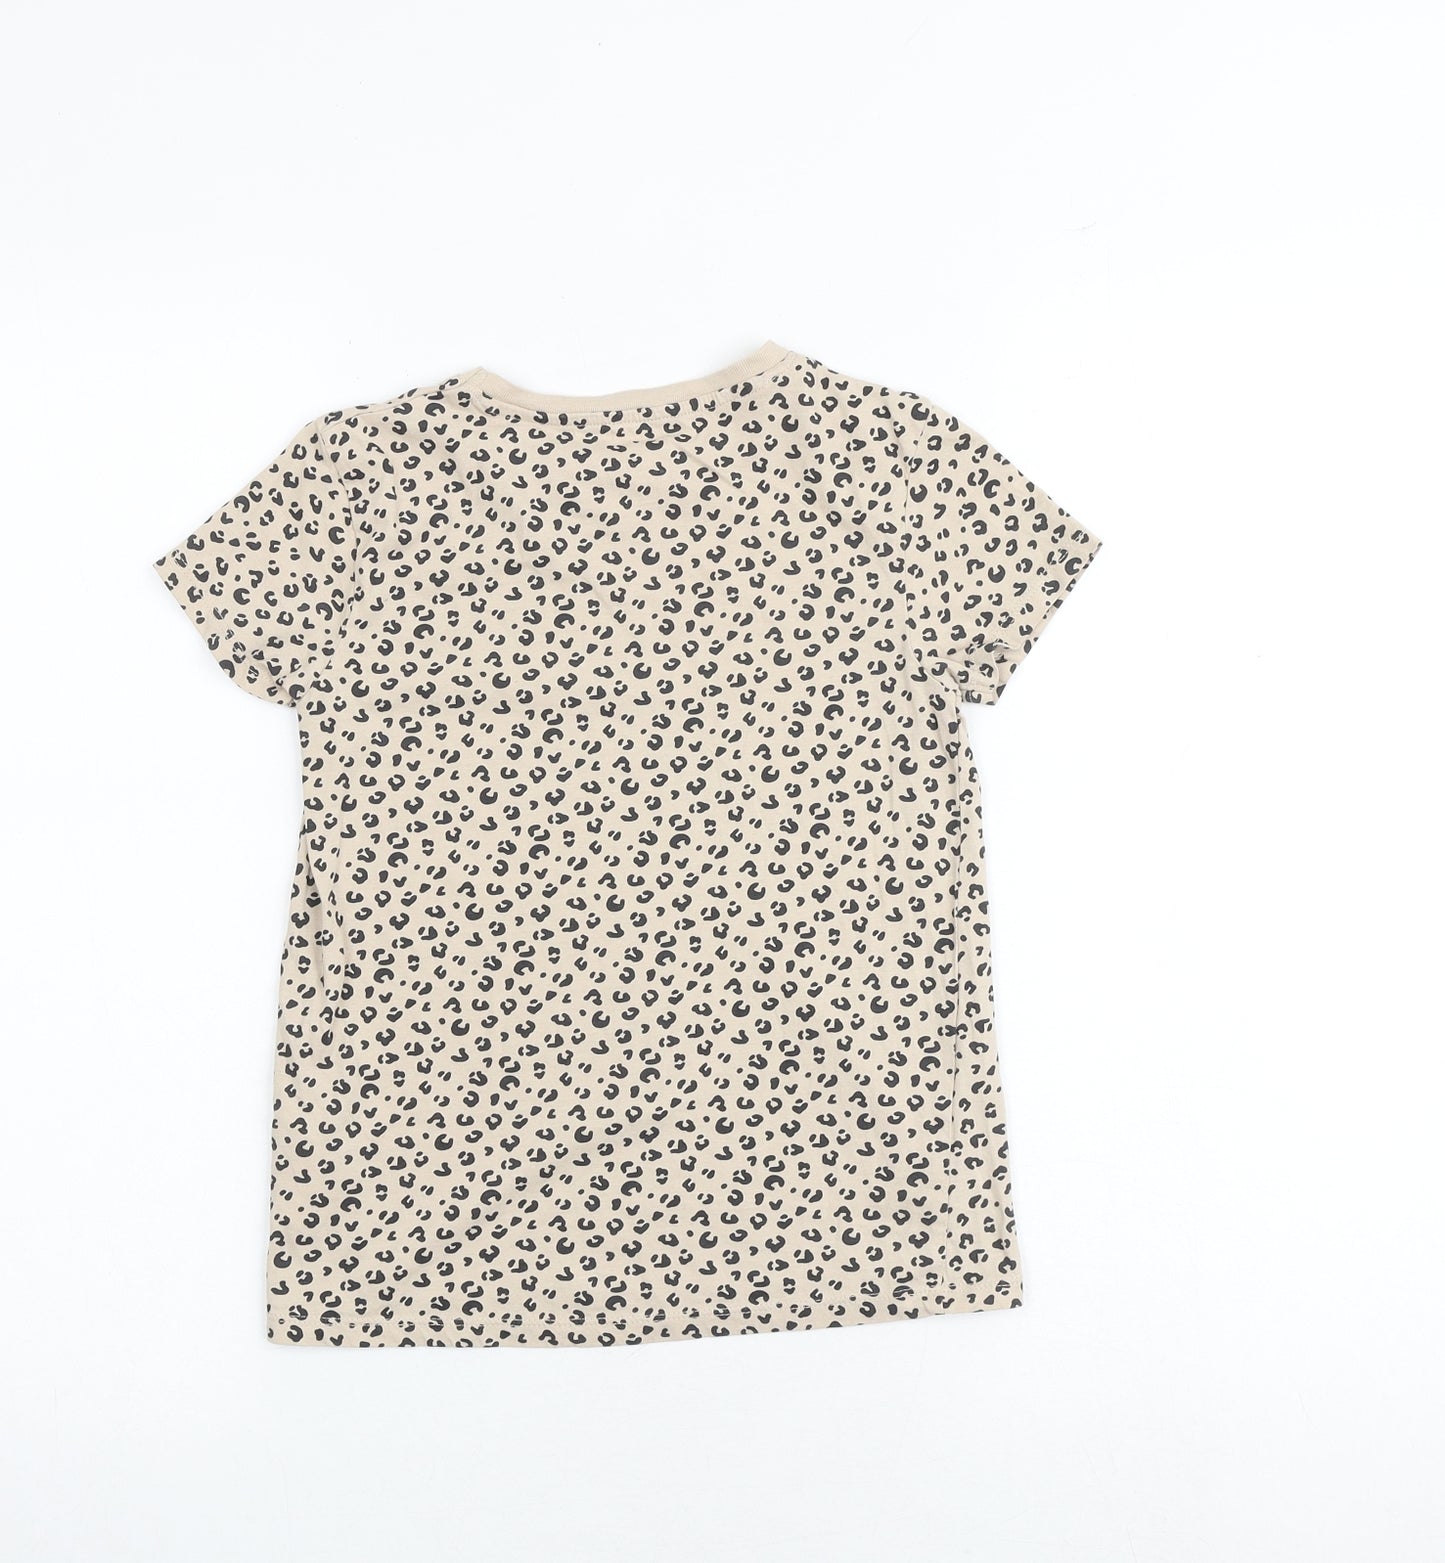 H&M Girls Beige Animal Print 100% Cotton Basic T-Shirt Size 9-10 Years Round Neck Pullover - Leopard Print